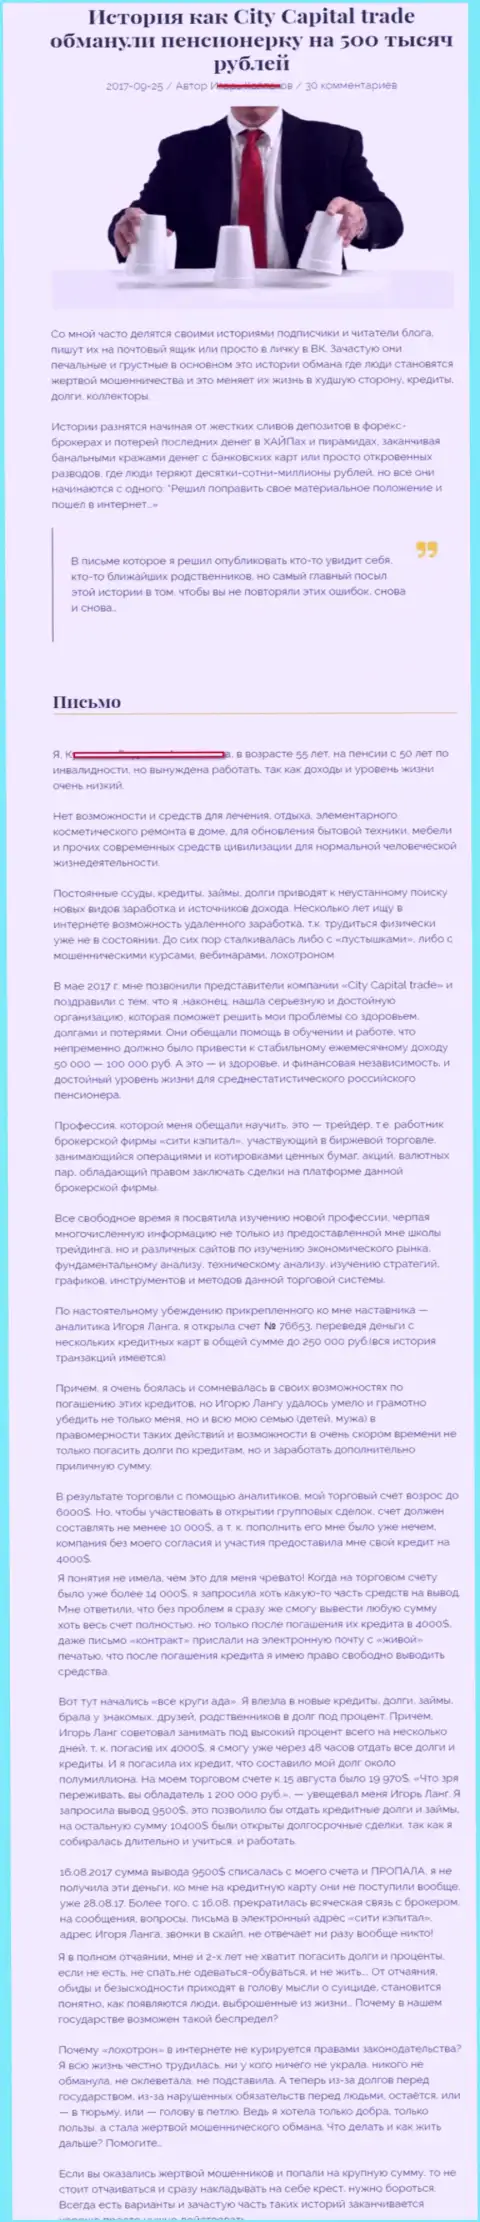 СитиКапиталТрейд обманули пенсионерку - инвалида на сумму 500 000 рублей - МОШЕННИКИ !!!